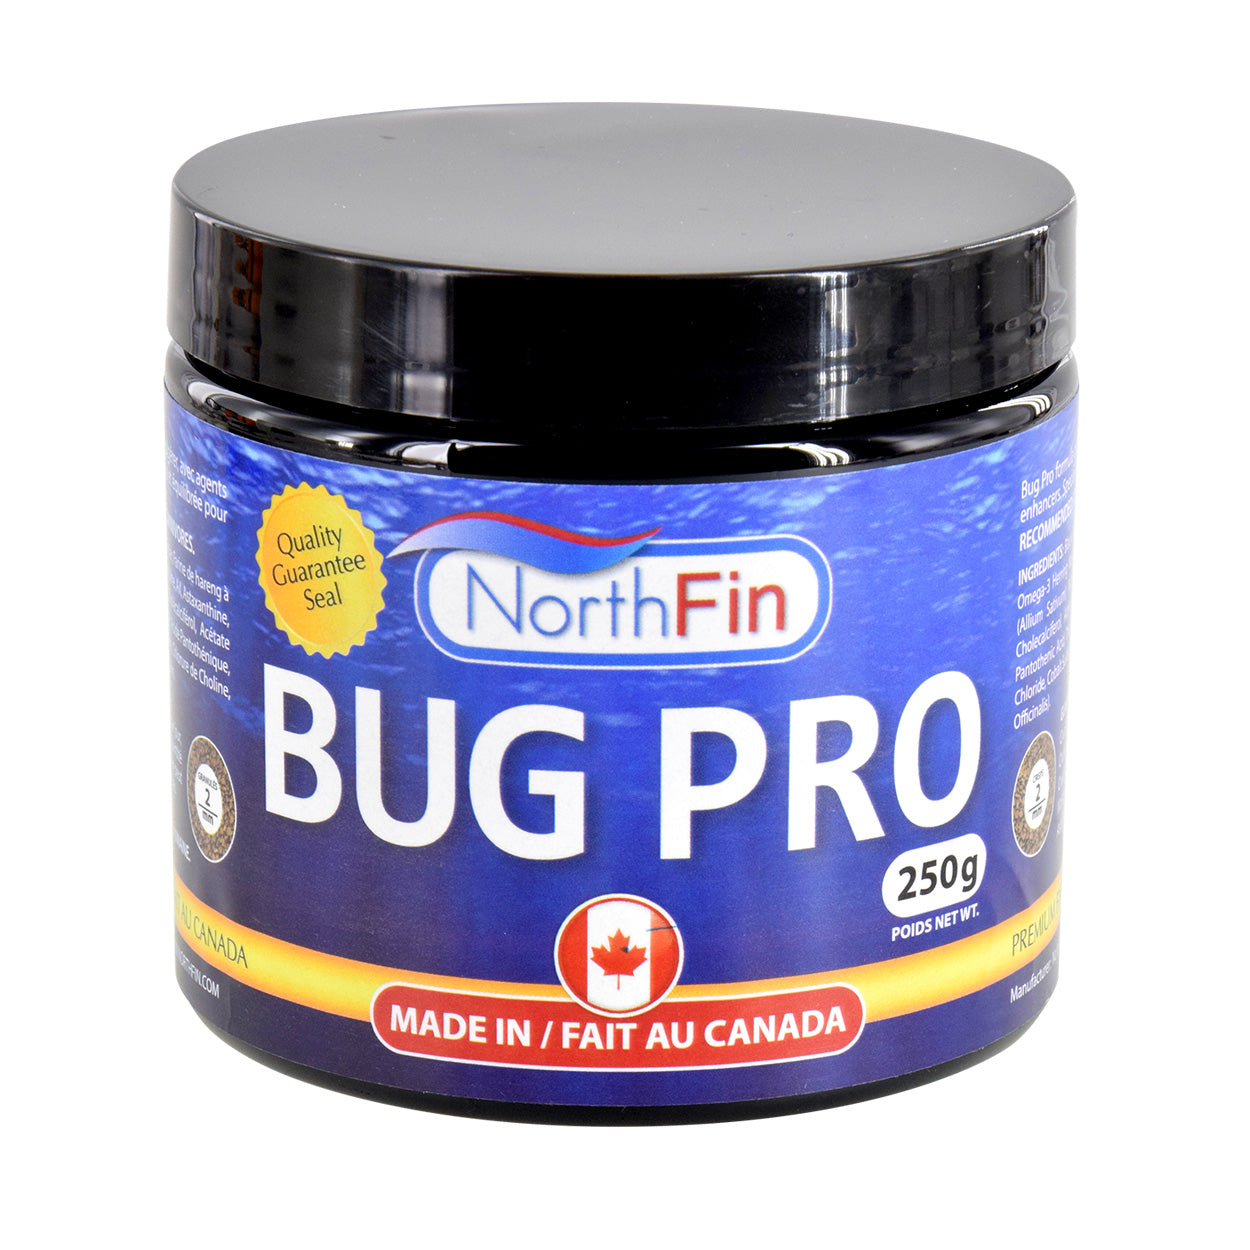 NorthFin Bug Pro